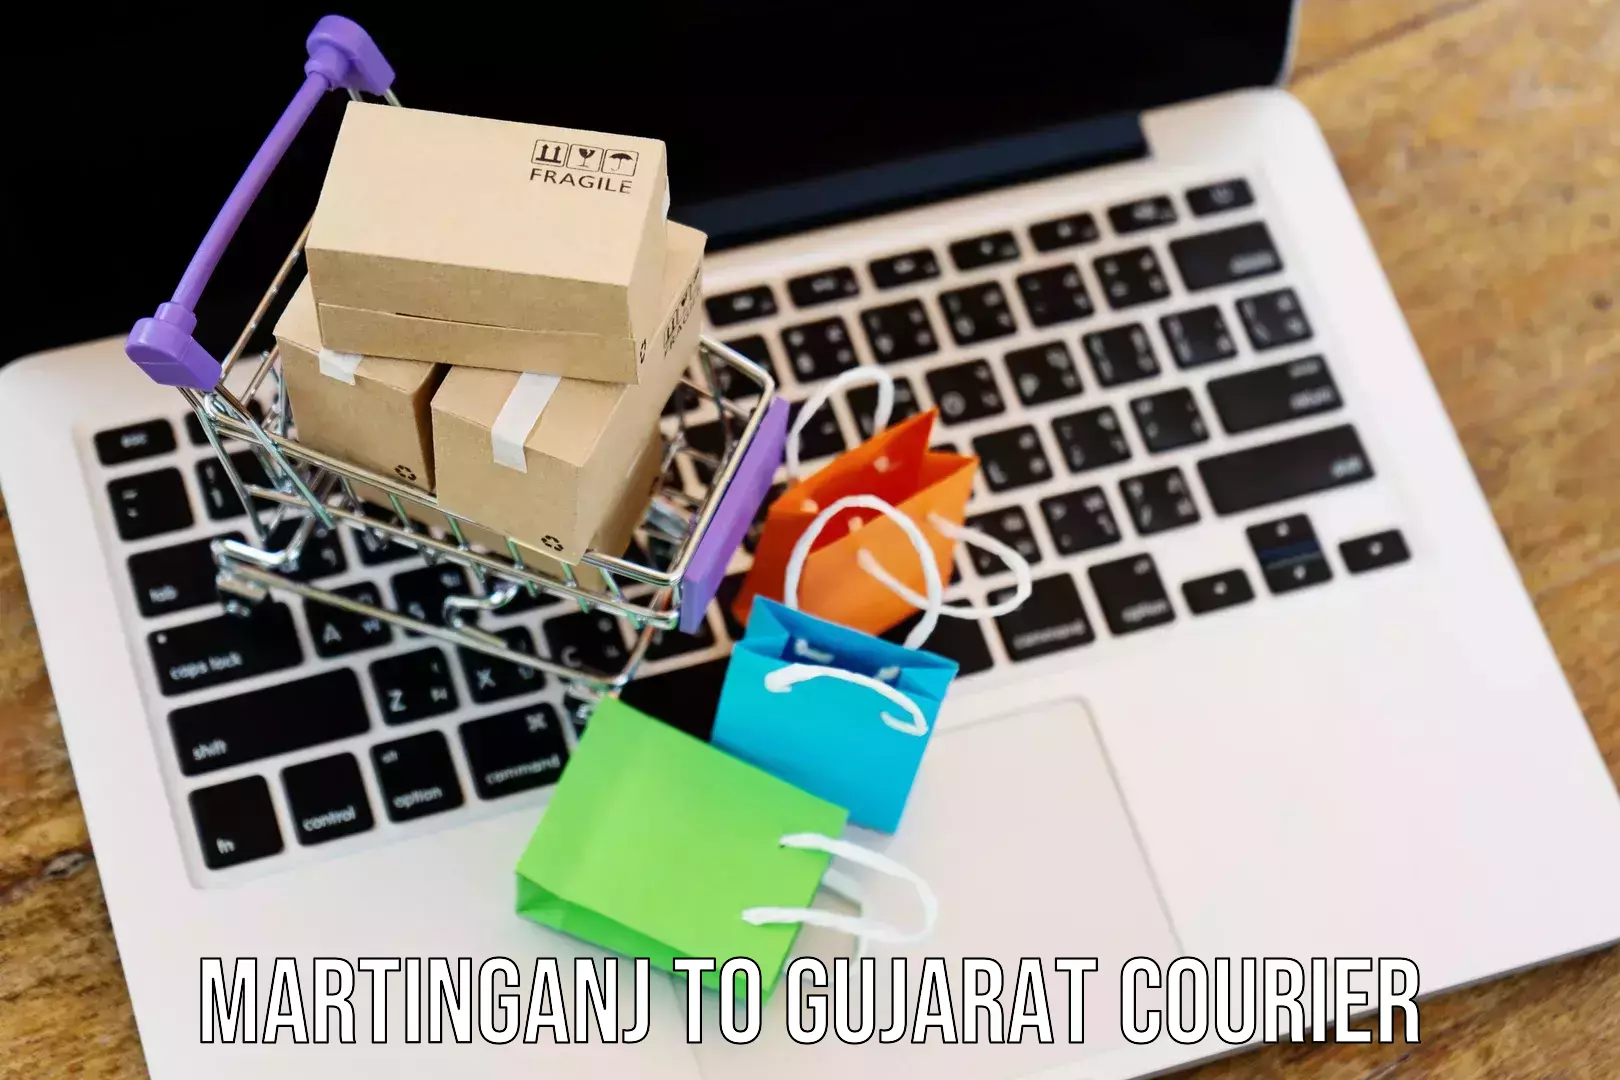 Enhanced tracking features Martinganj to Gujarat